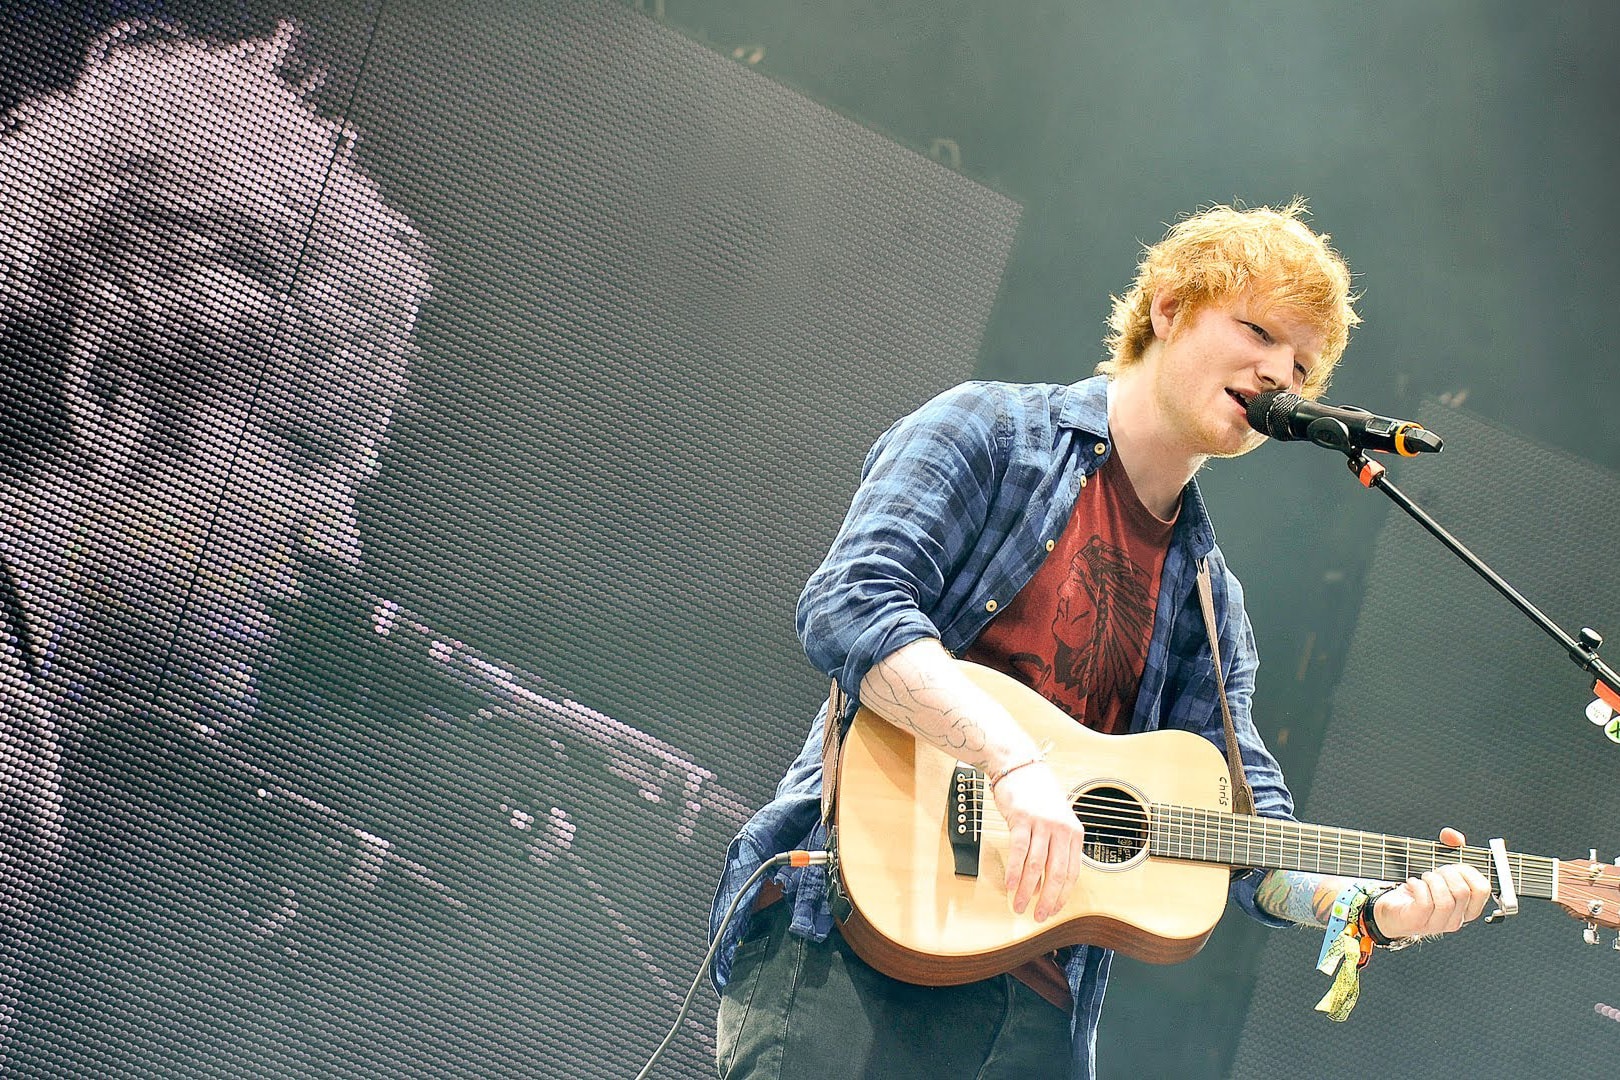 Ed Sheeran 究竟因何要与个人 Twitter 账号「永别」